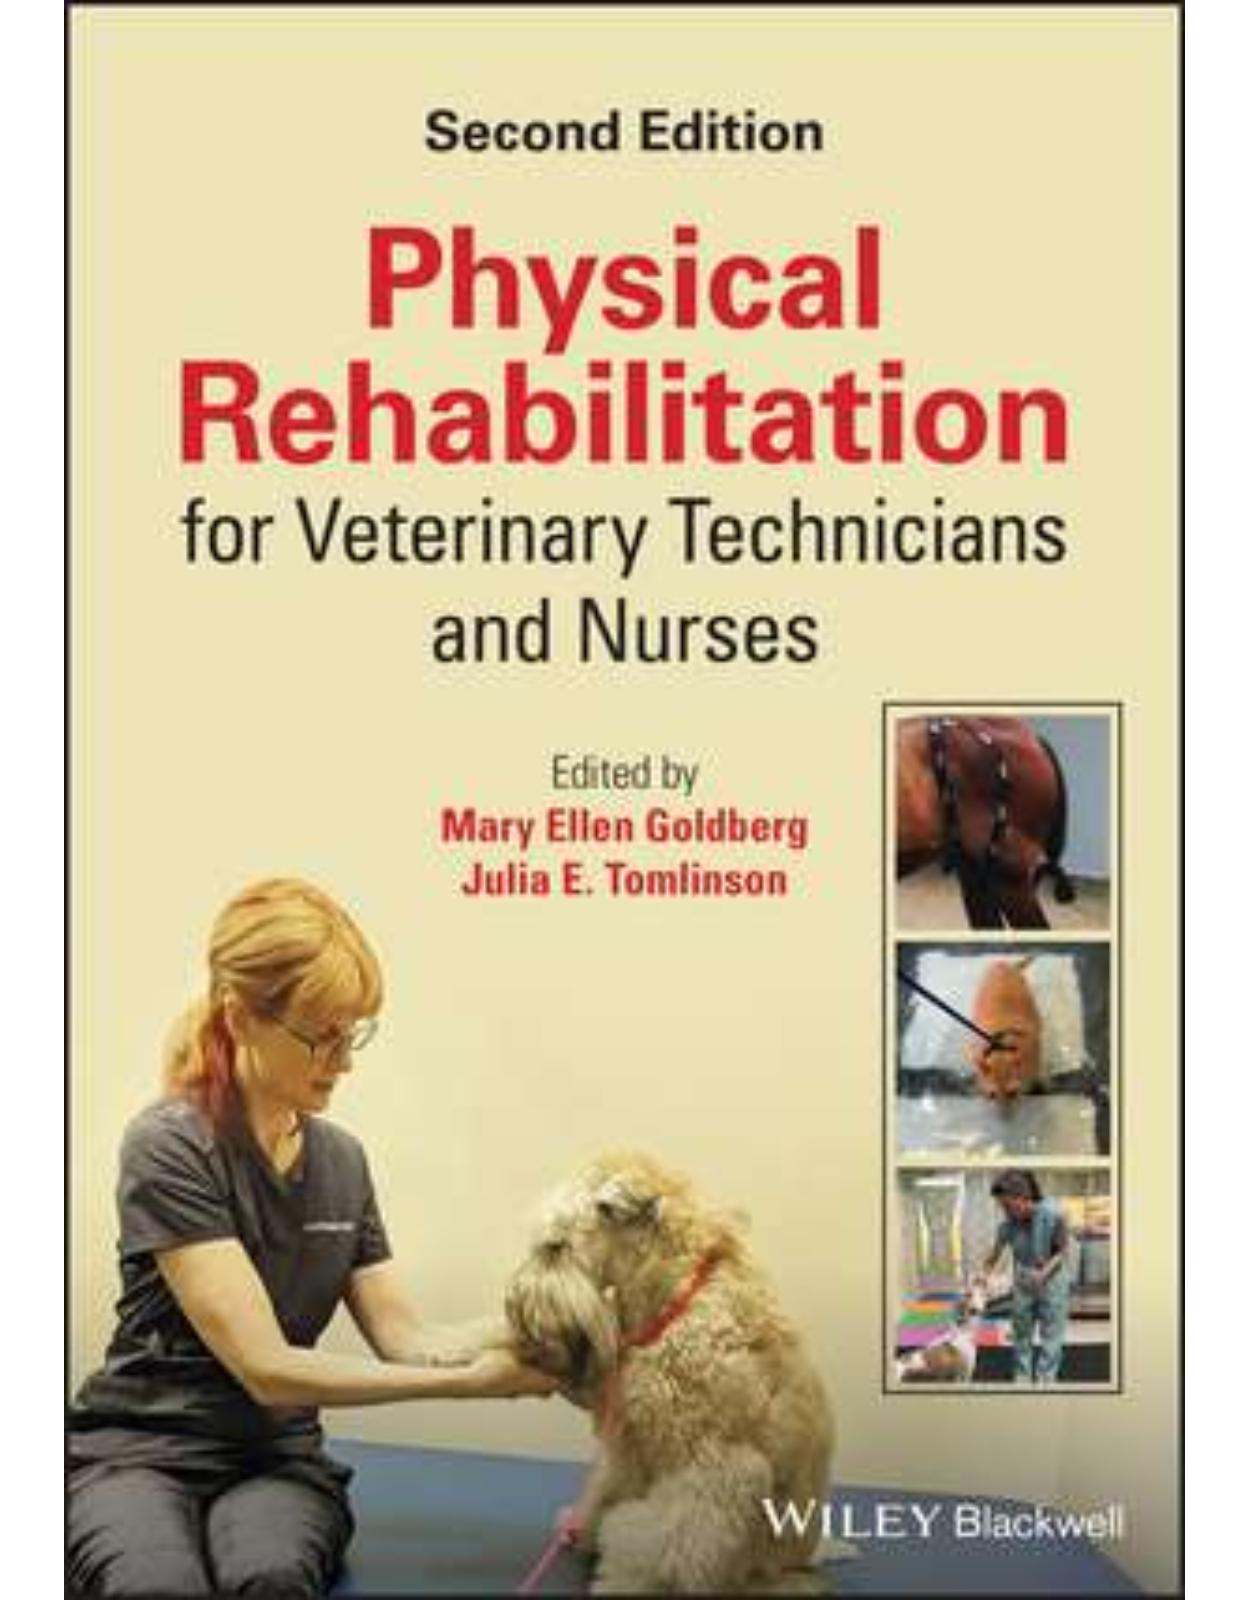 Physical Rehabilitation for Veterinary Technicians and Nurses 2nd Edition